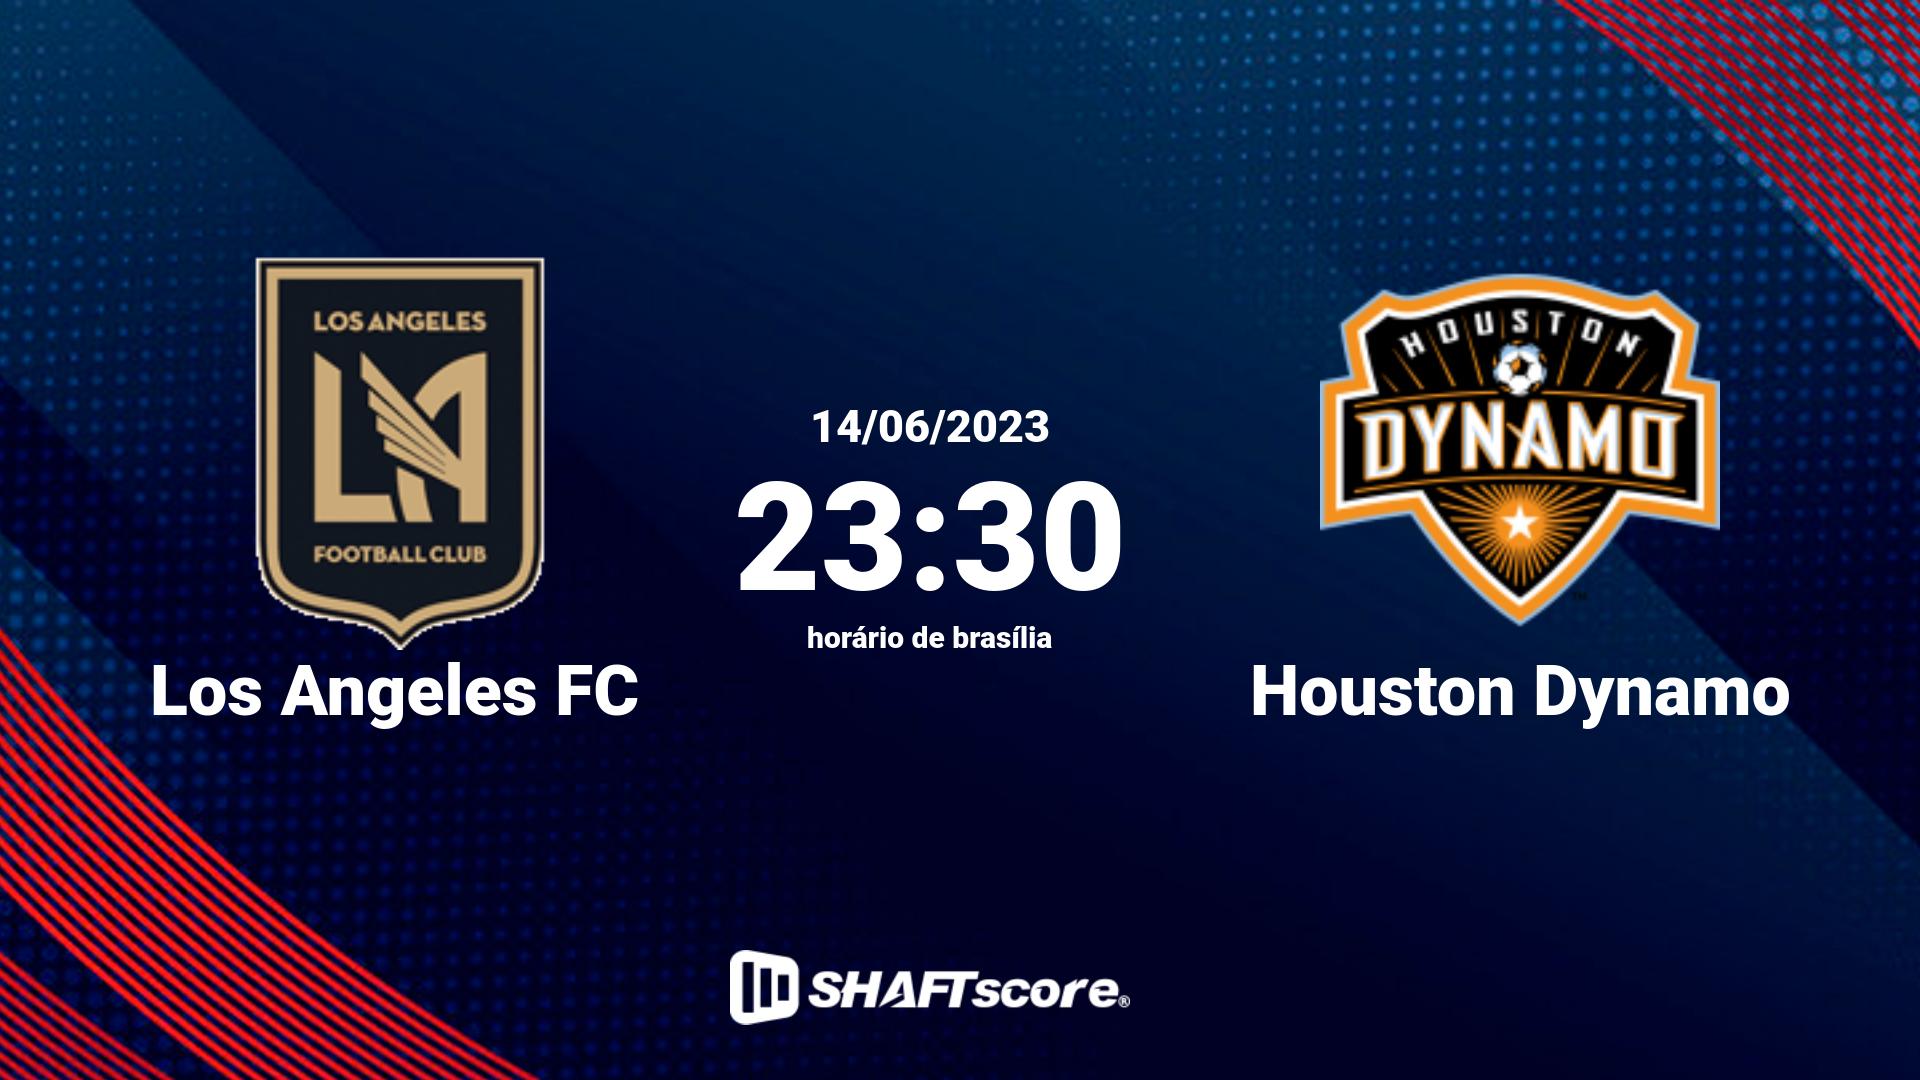 Estatísticas do jogo Los Angeles FC vs Houston Dynamo 14.06 23:30